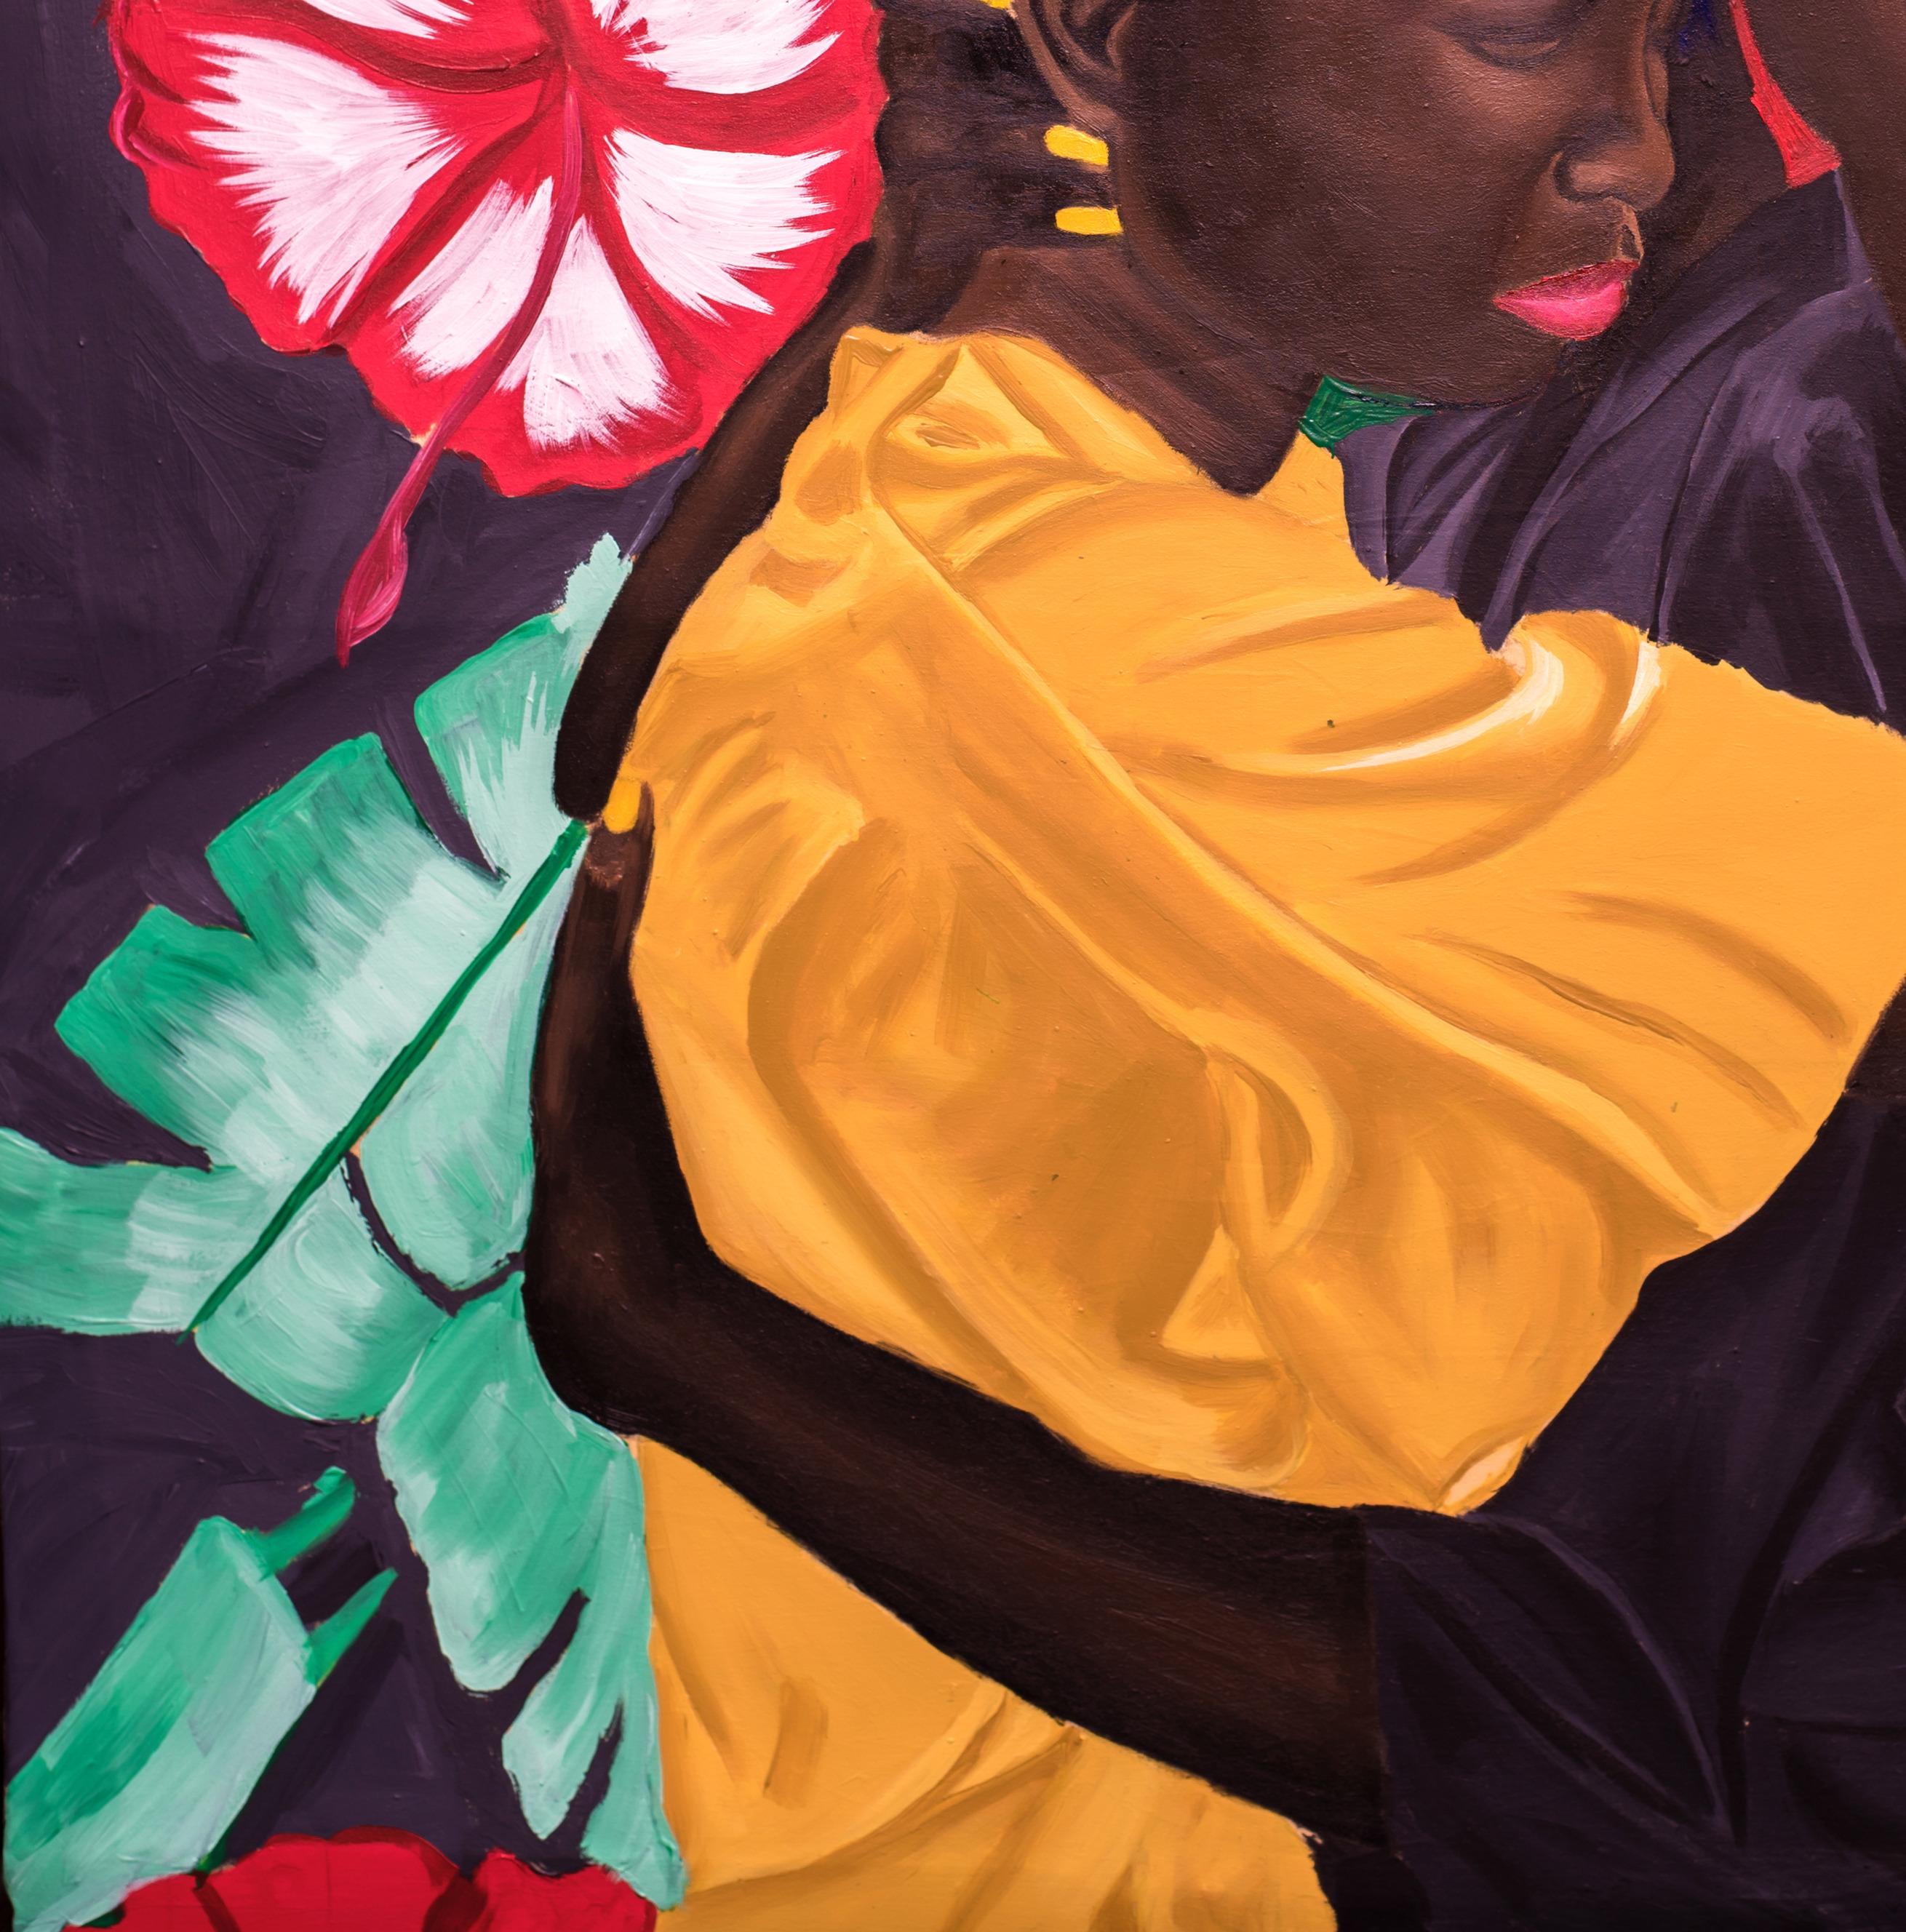 Art is a powerful medium for conveying emotions, and Olaosun Oluwapelumi's artwork 